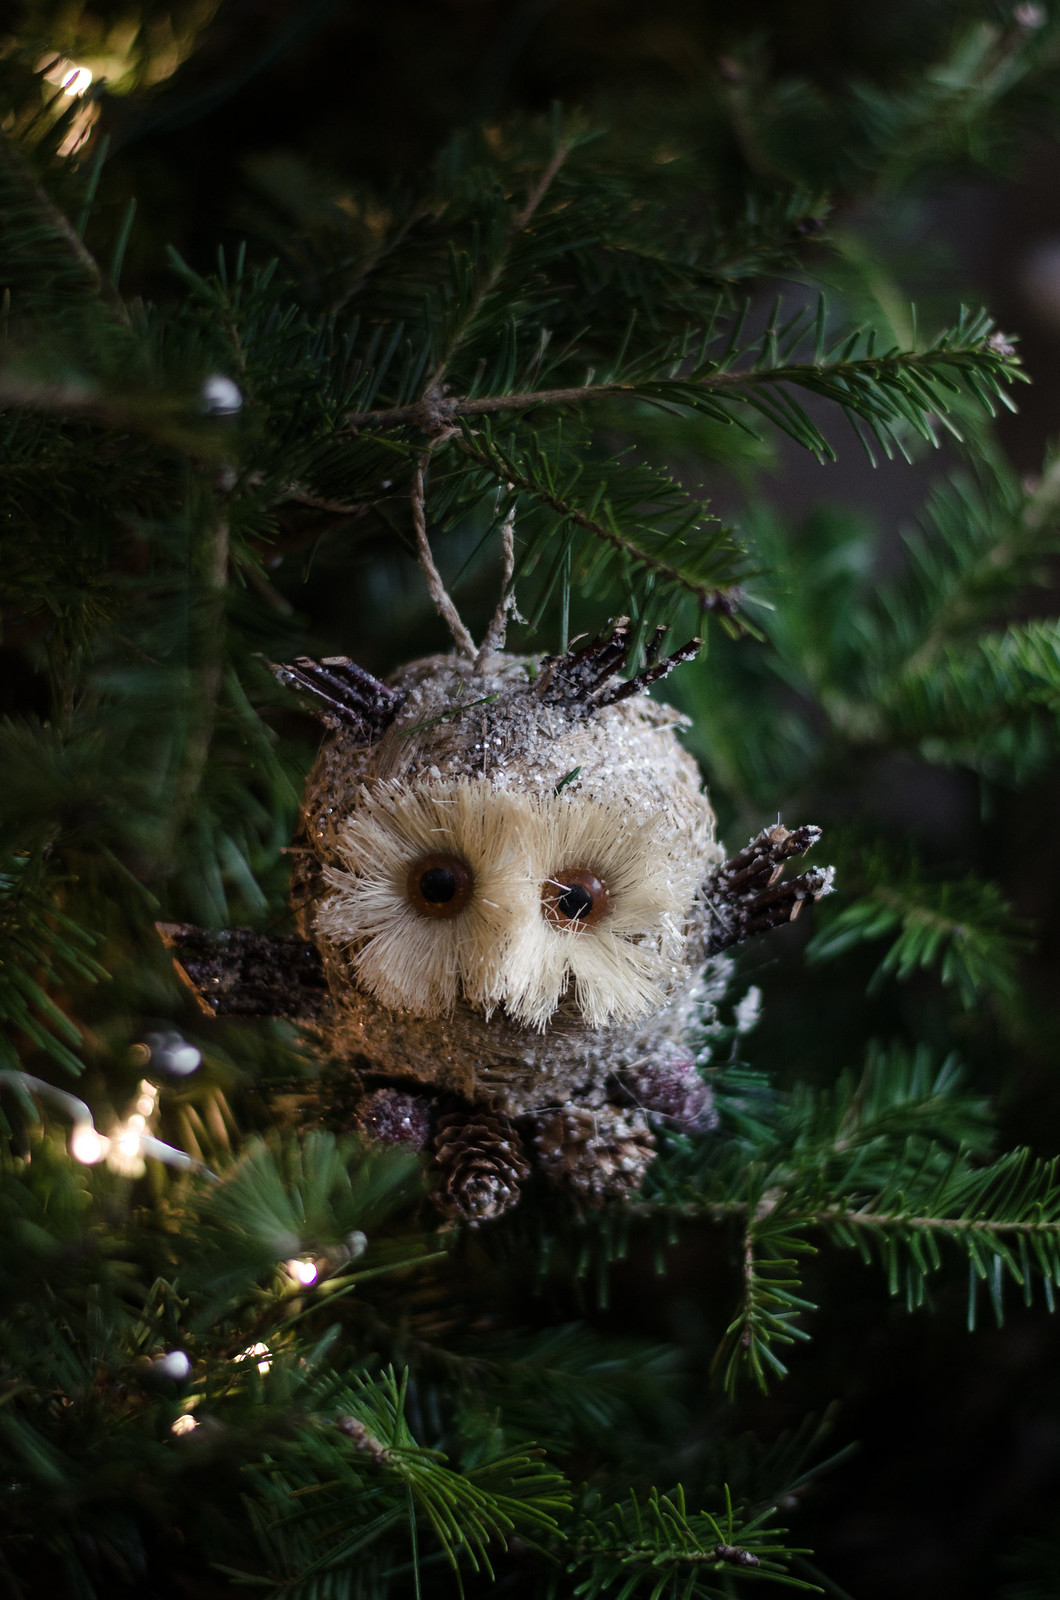 Owl Ornament on juliettelaura.blogspot.com